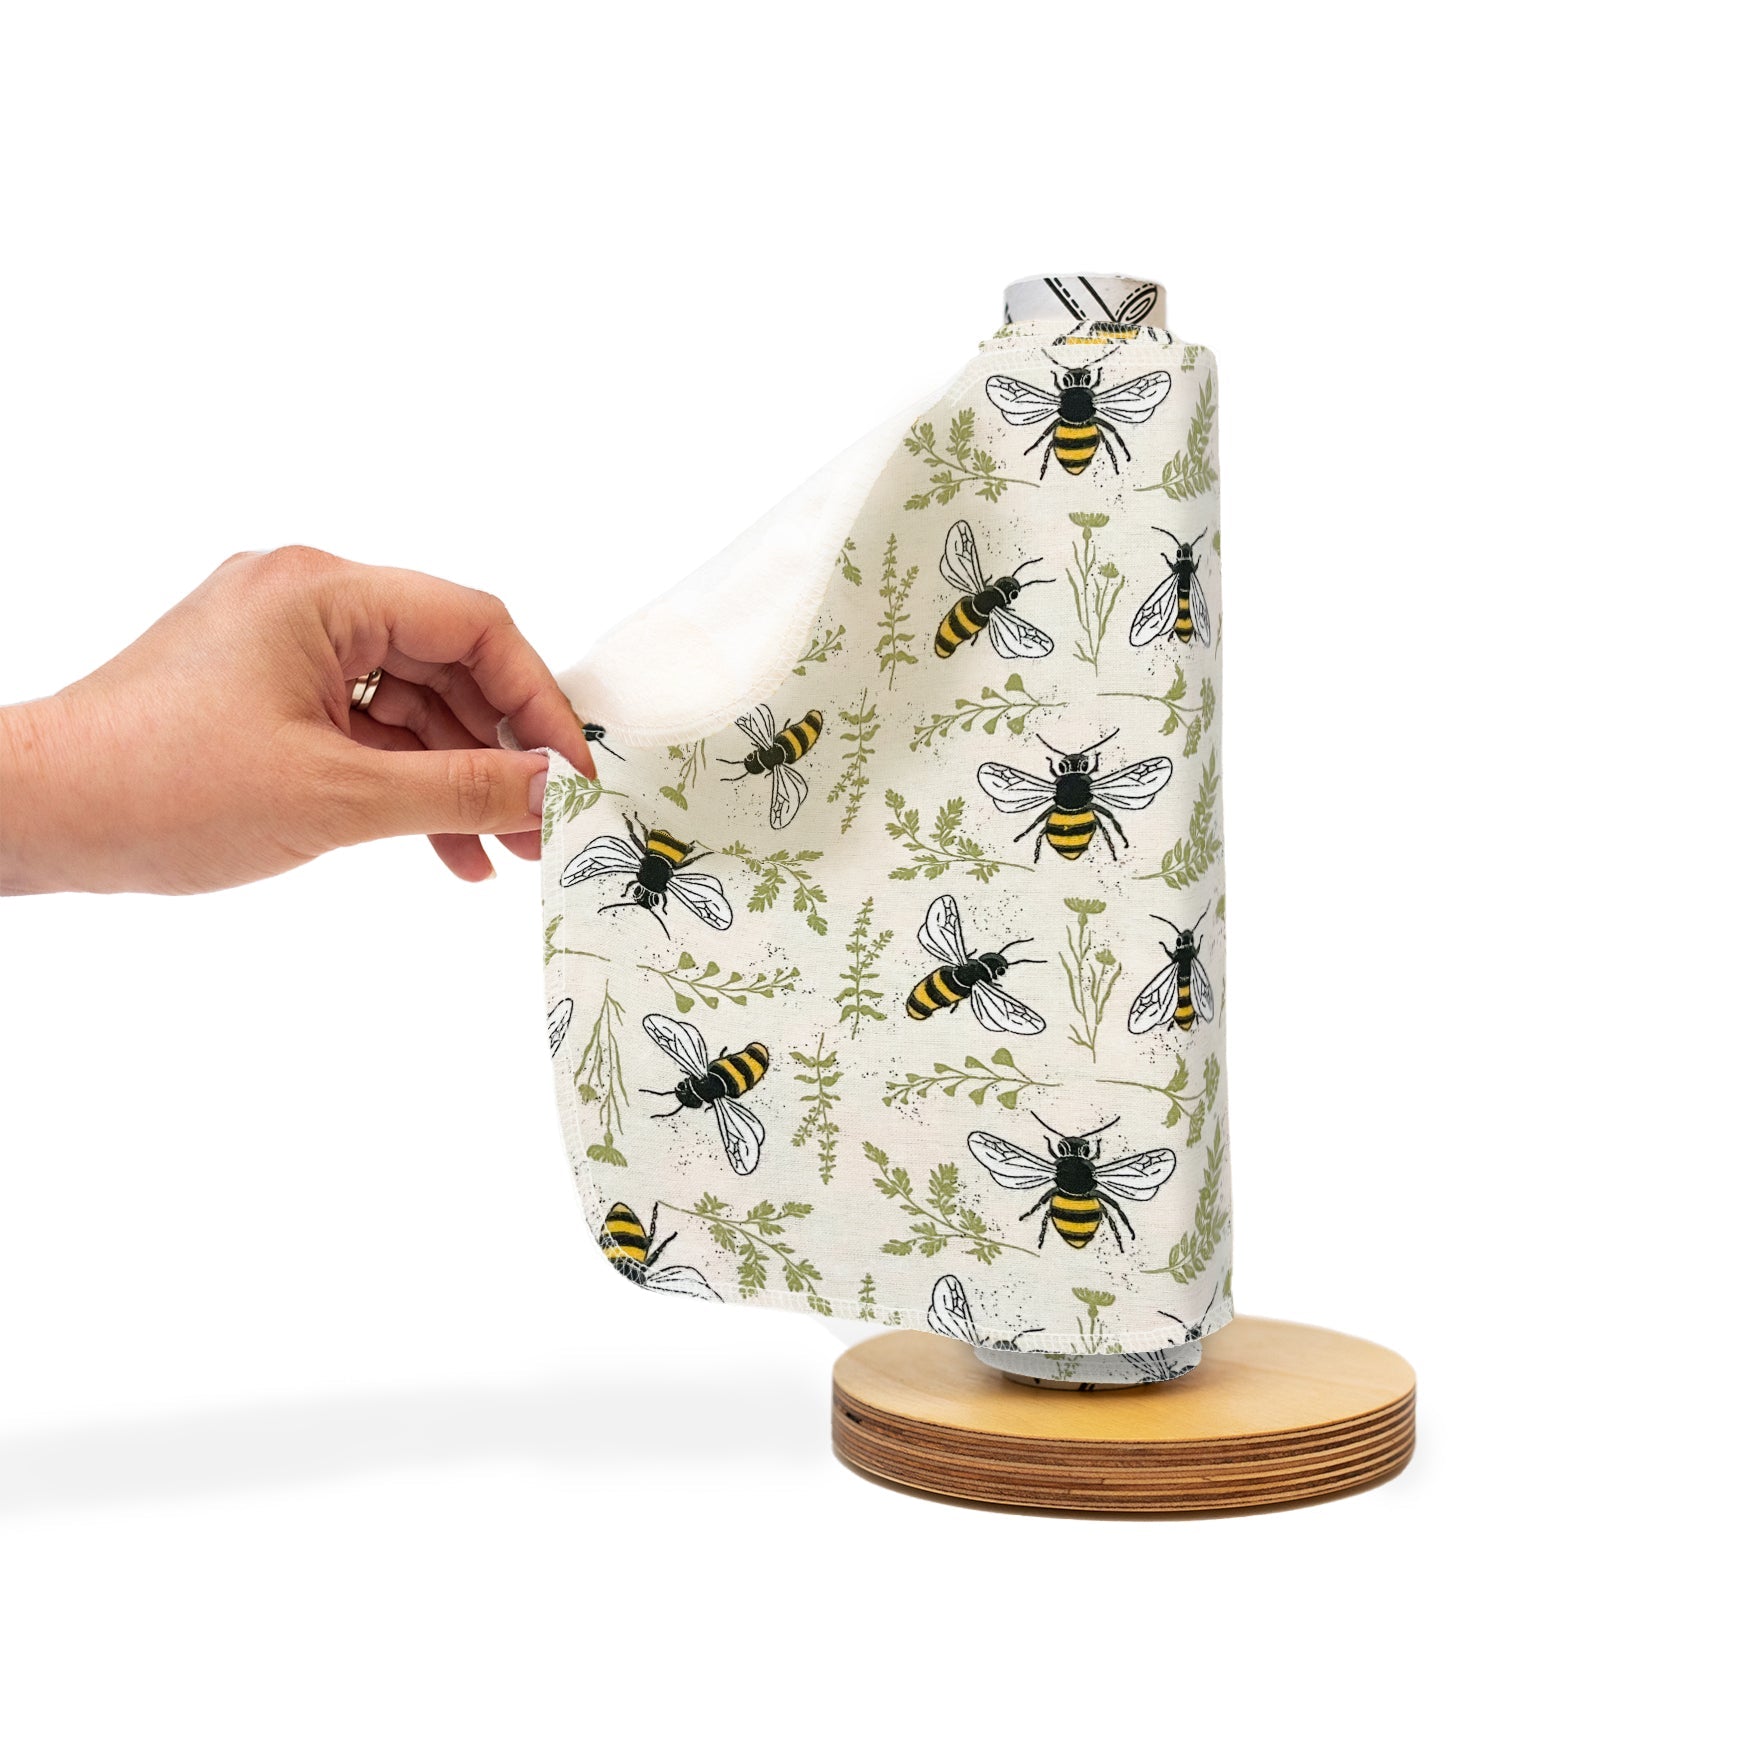 Reusable Absorbent Paper Towel Roll - Volverde